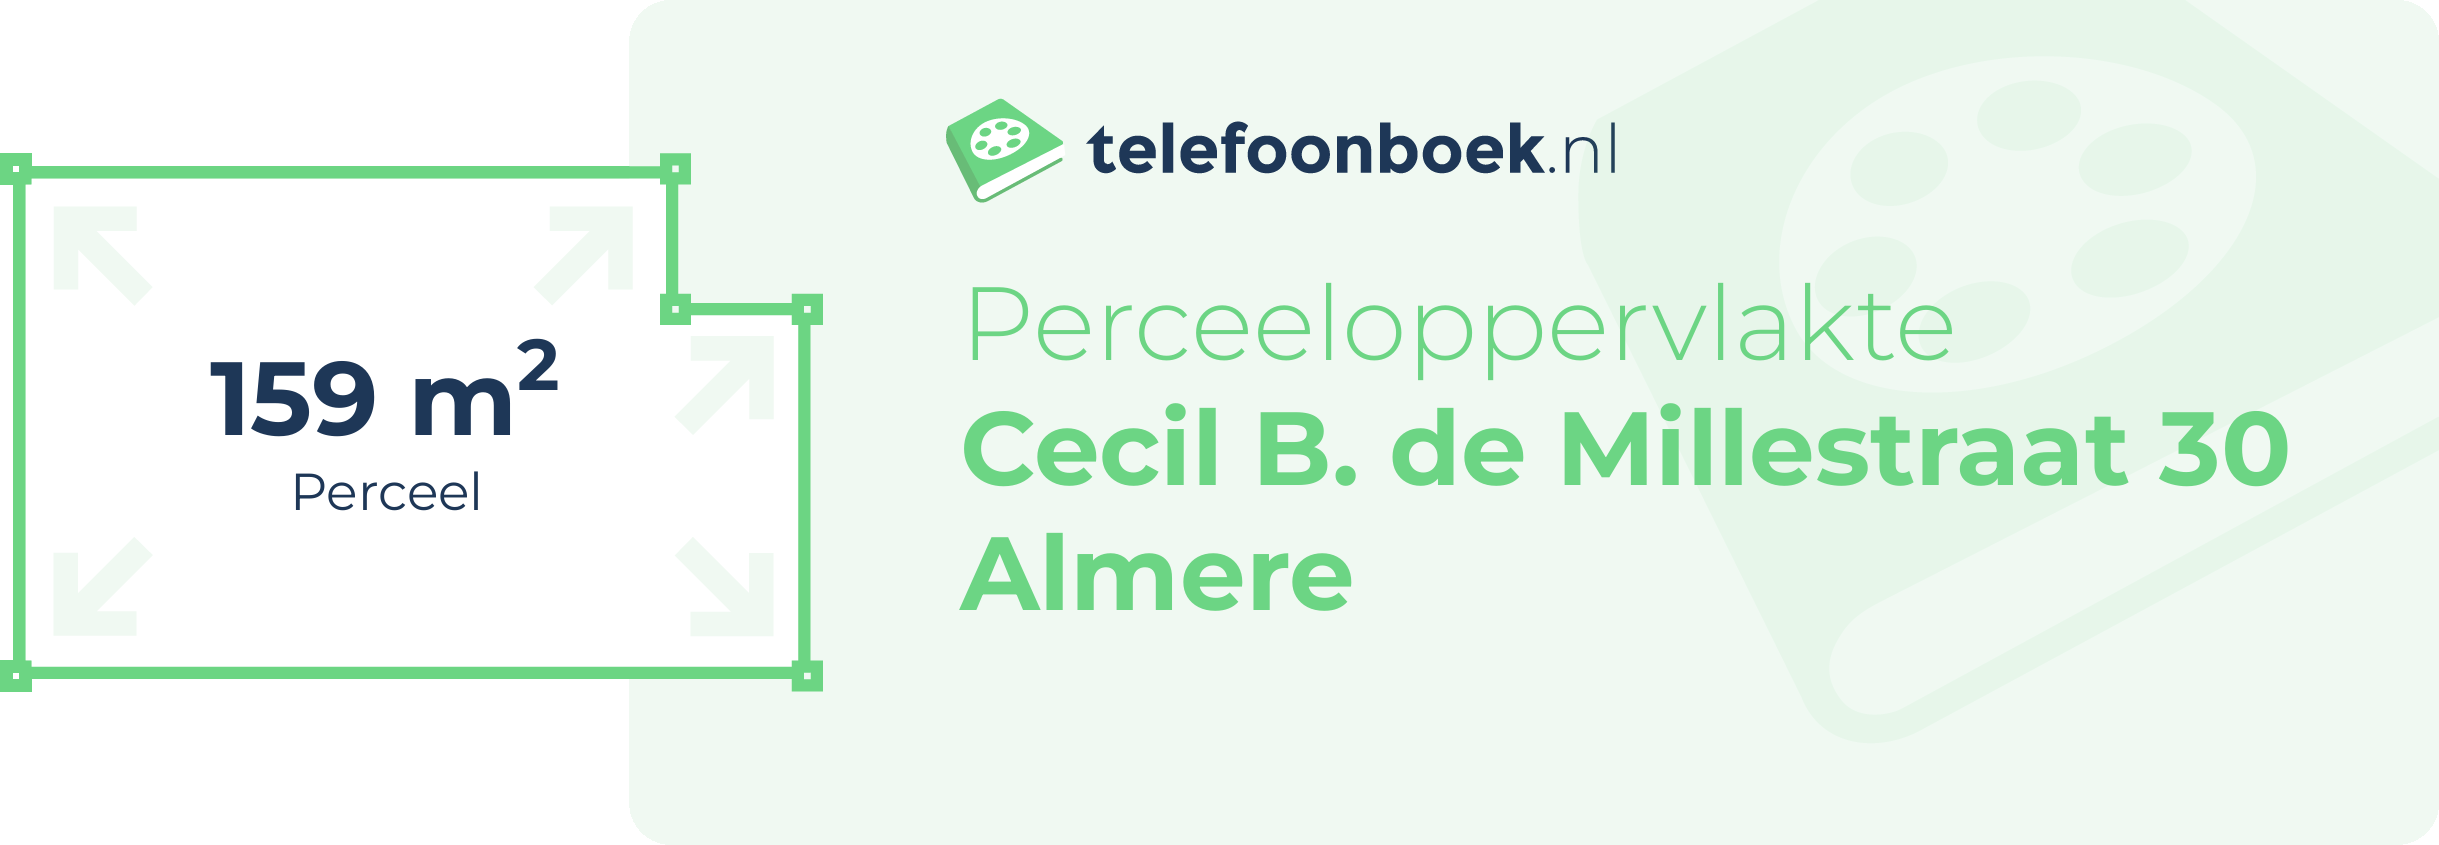 Perceeloppervlakte Cecil B. De Millestraat 30 Almere